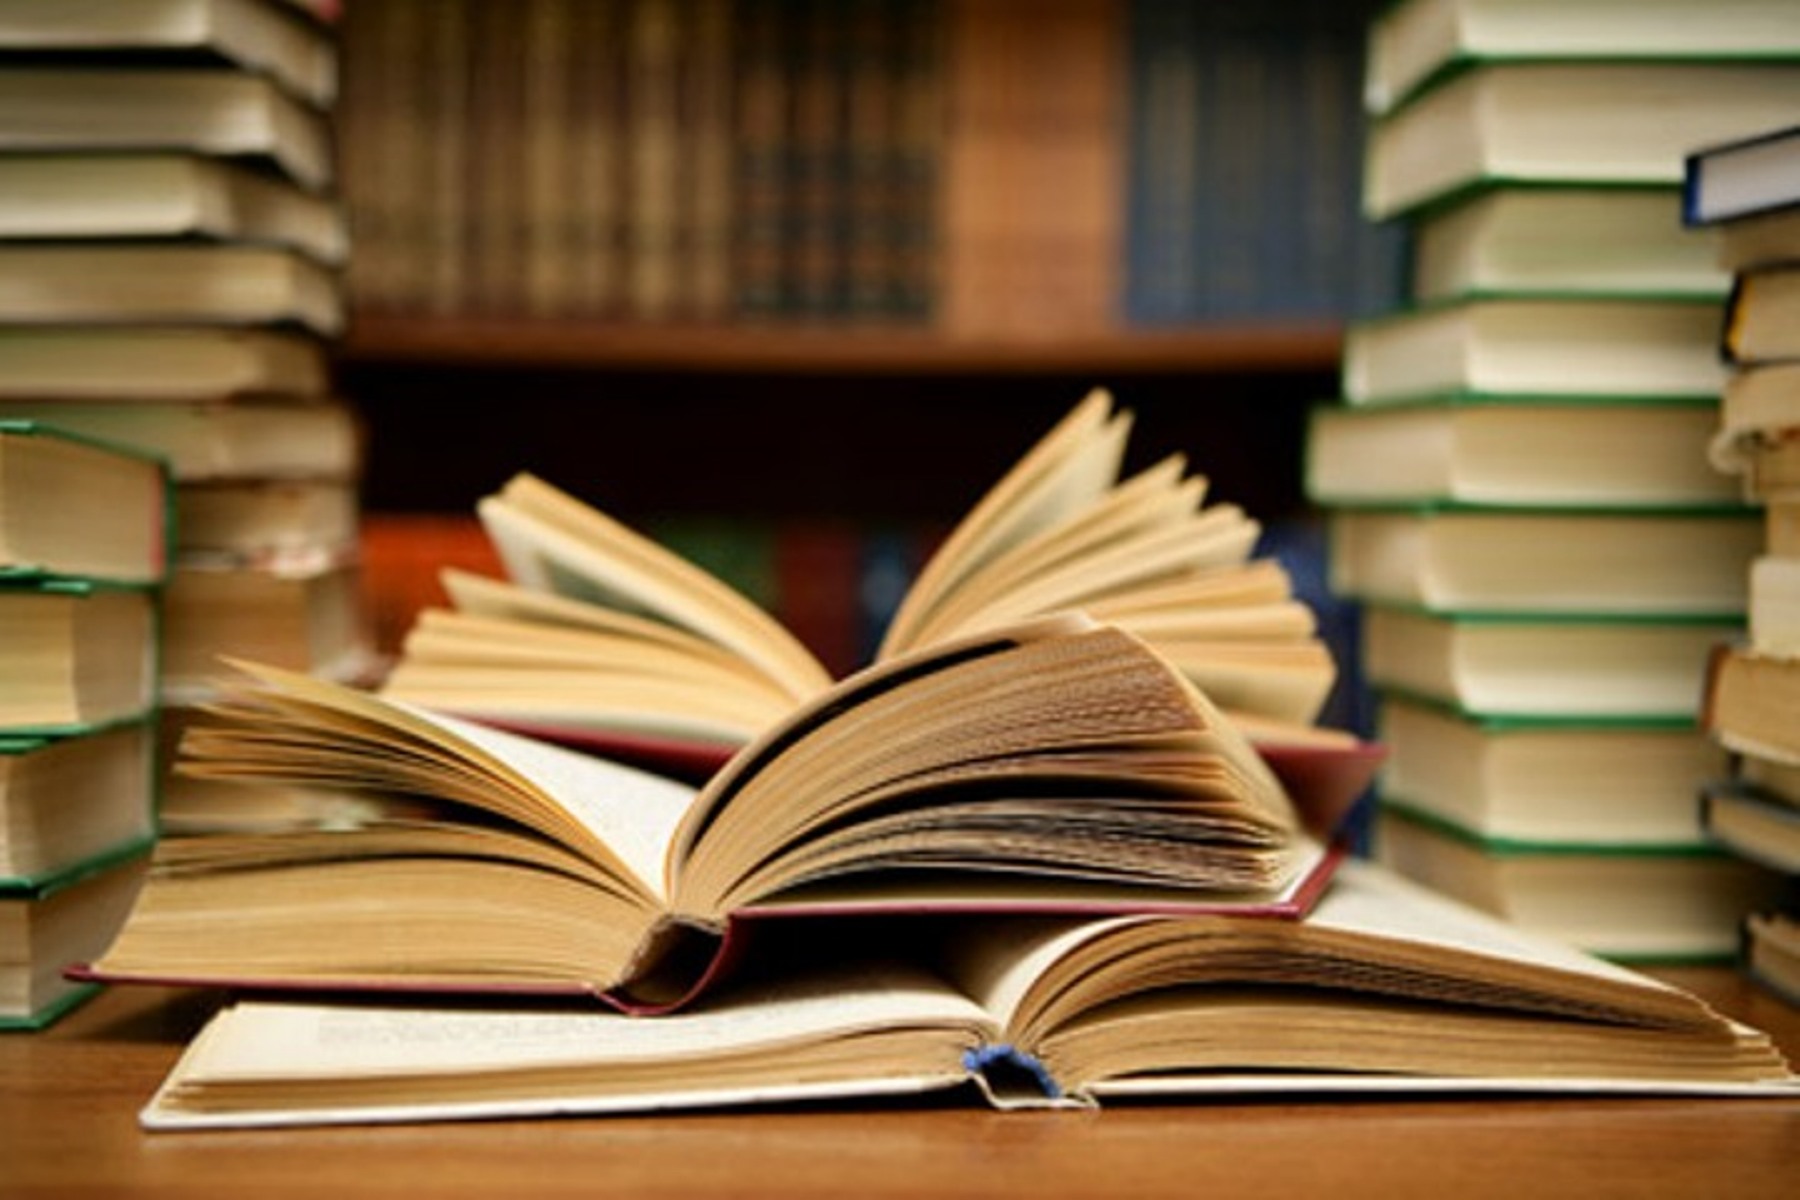 La biblioteca di libri di lingua romena di Milano rimarrà chiusa.